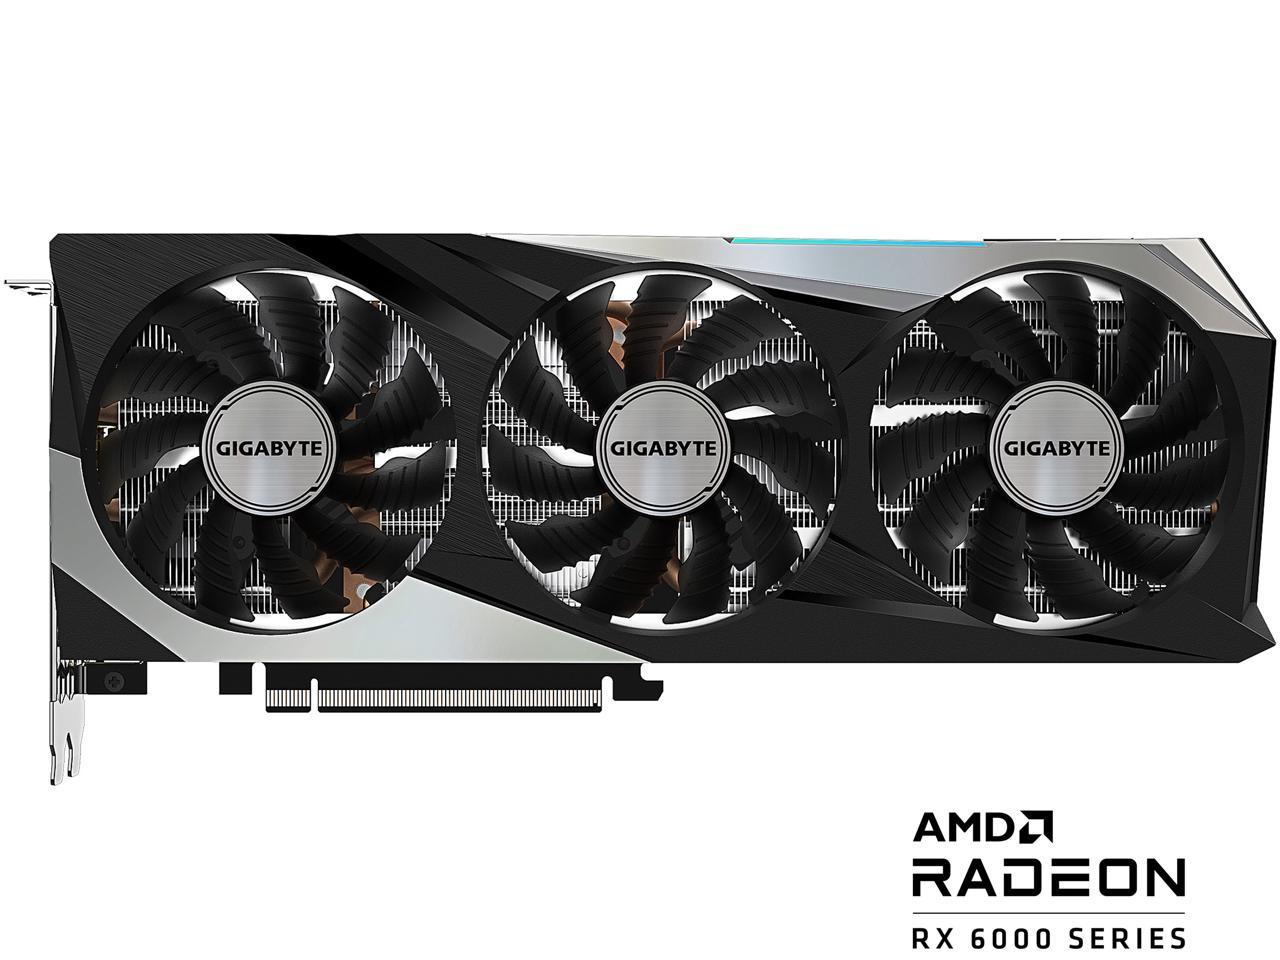 Gigabyte Radeon RX 6800 XT Windforce 3x $519.99 after $20 promo code @ Newegg